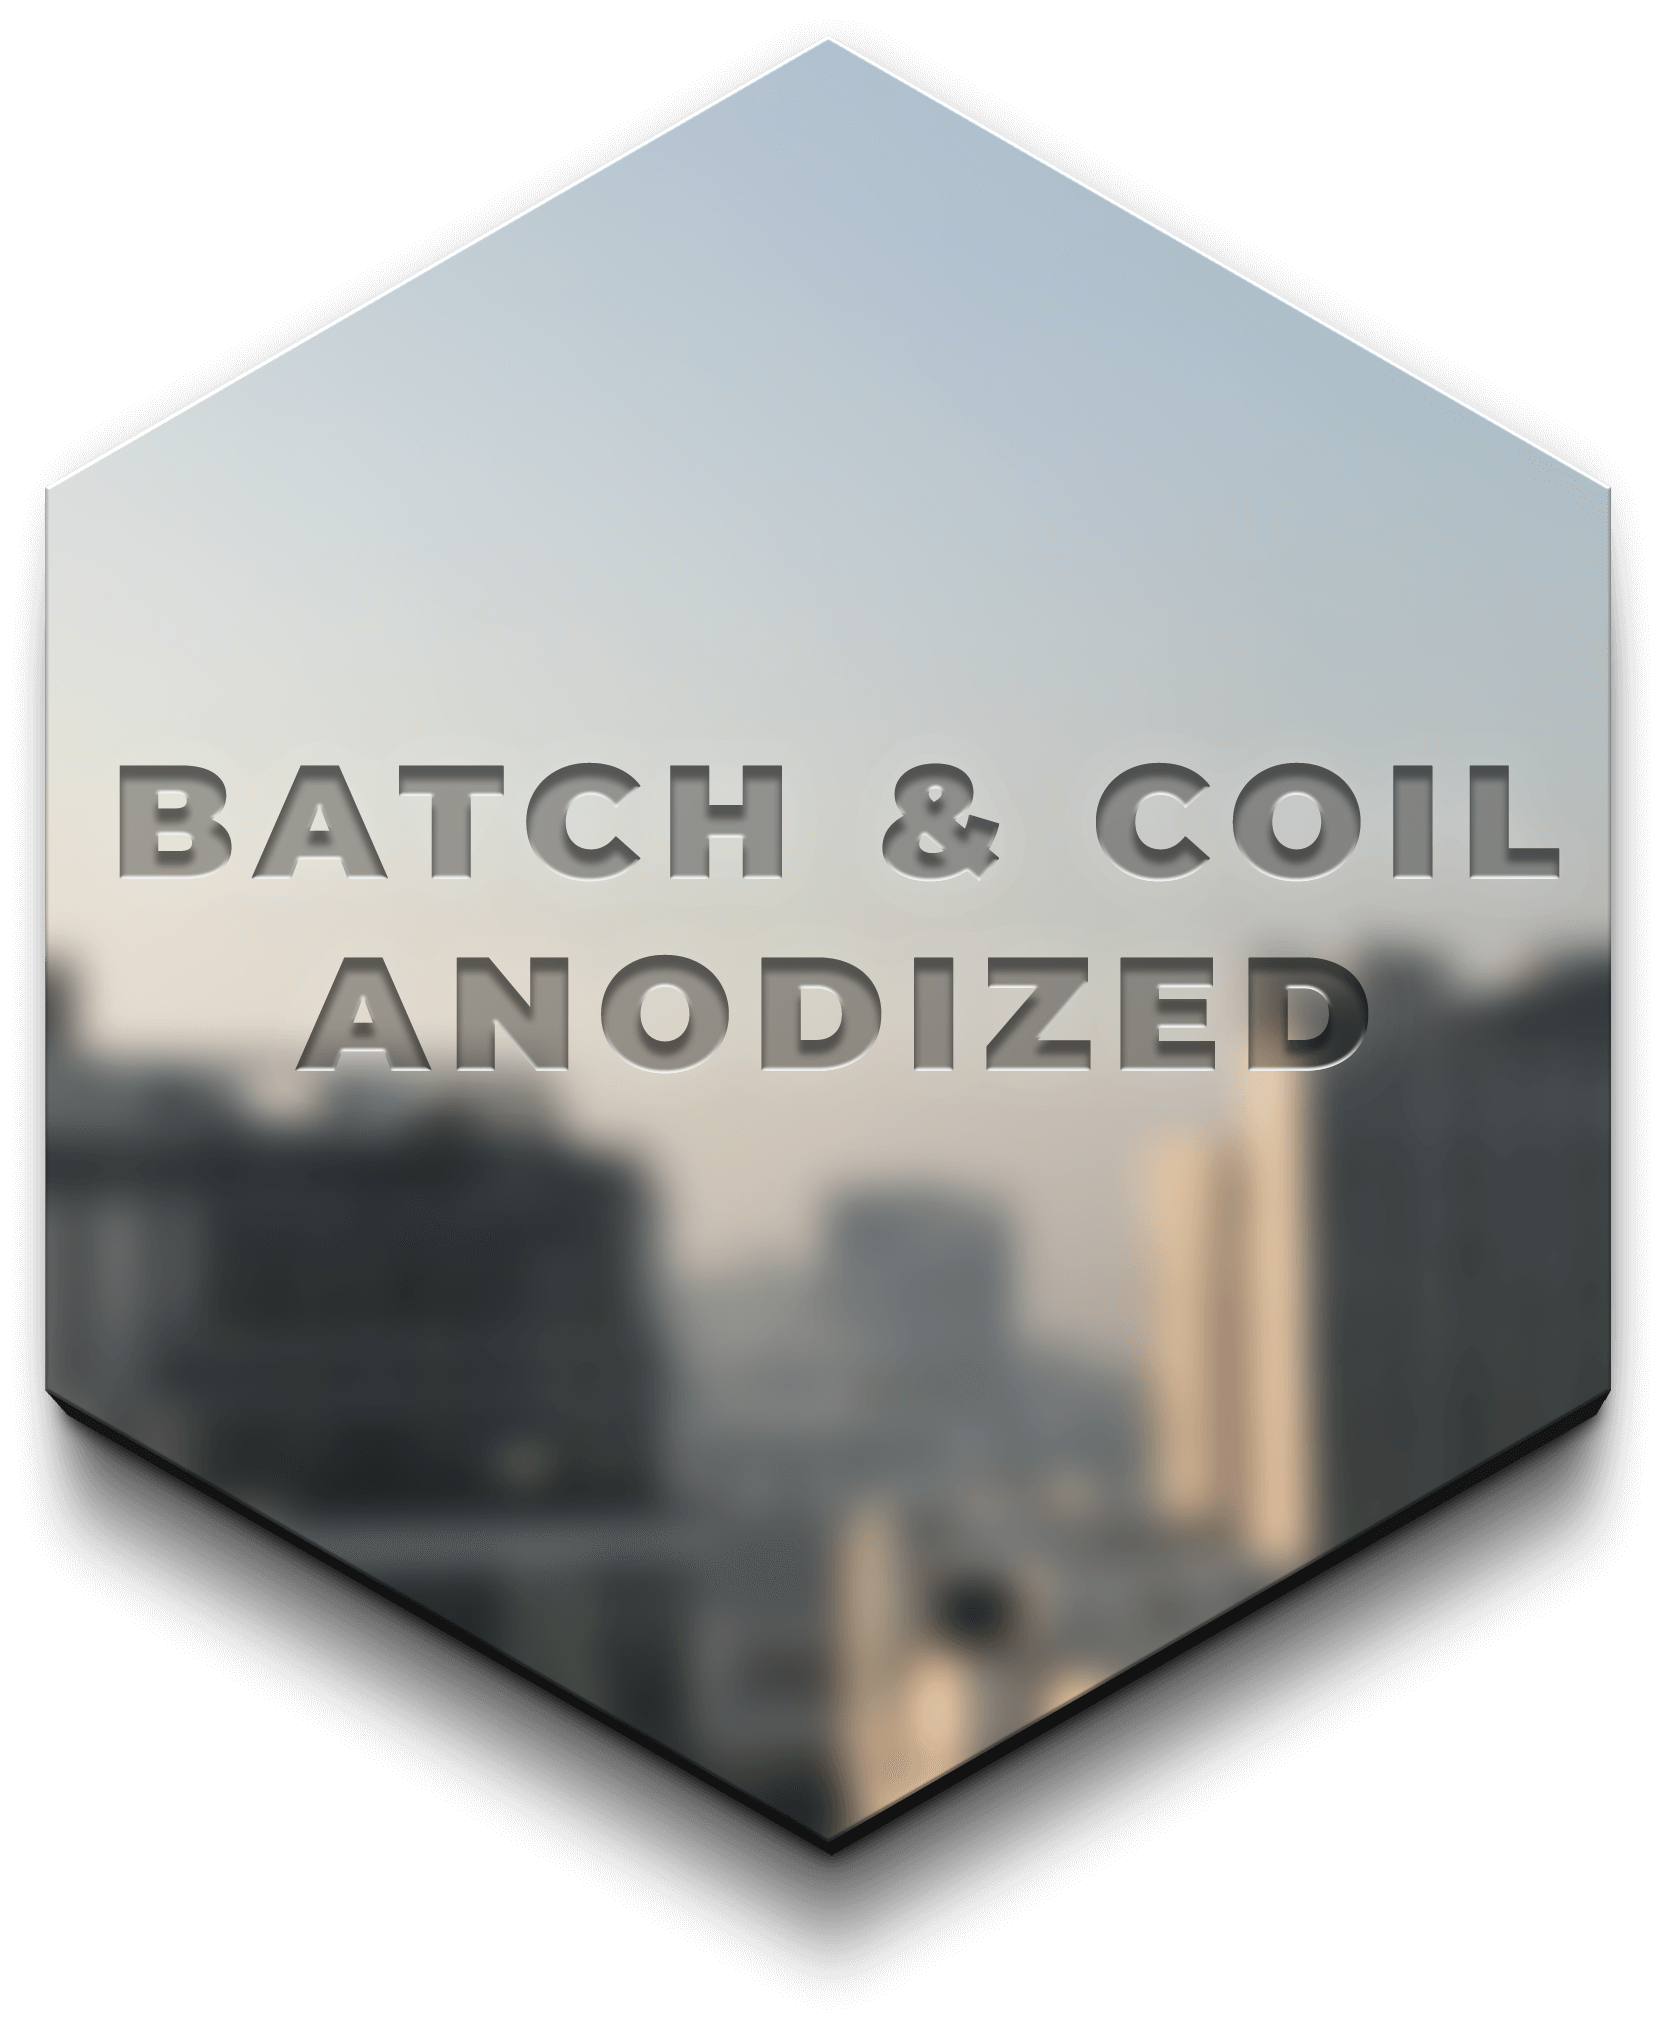 Batch & coil anodized